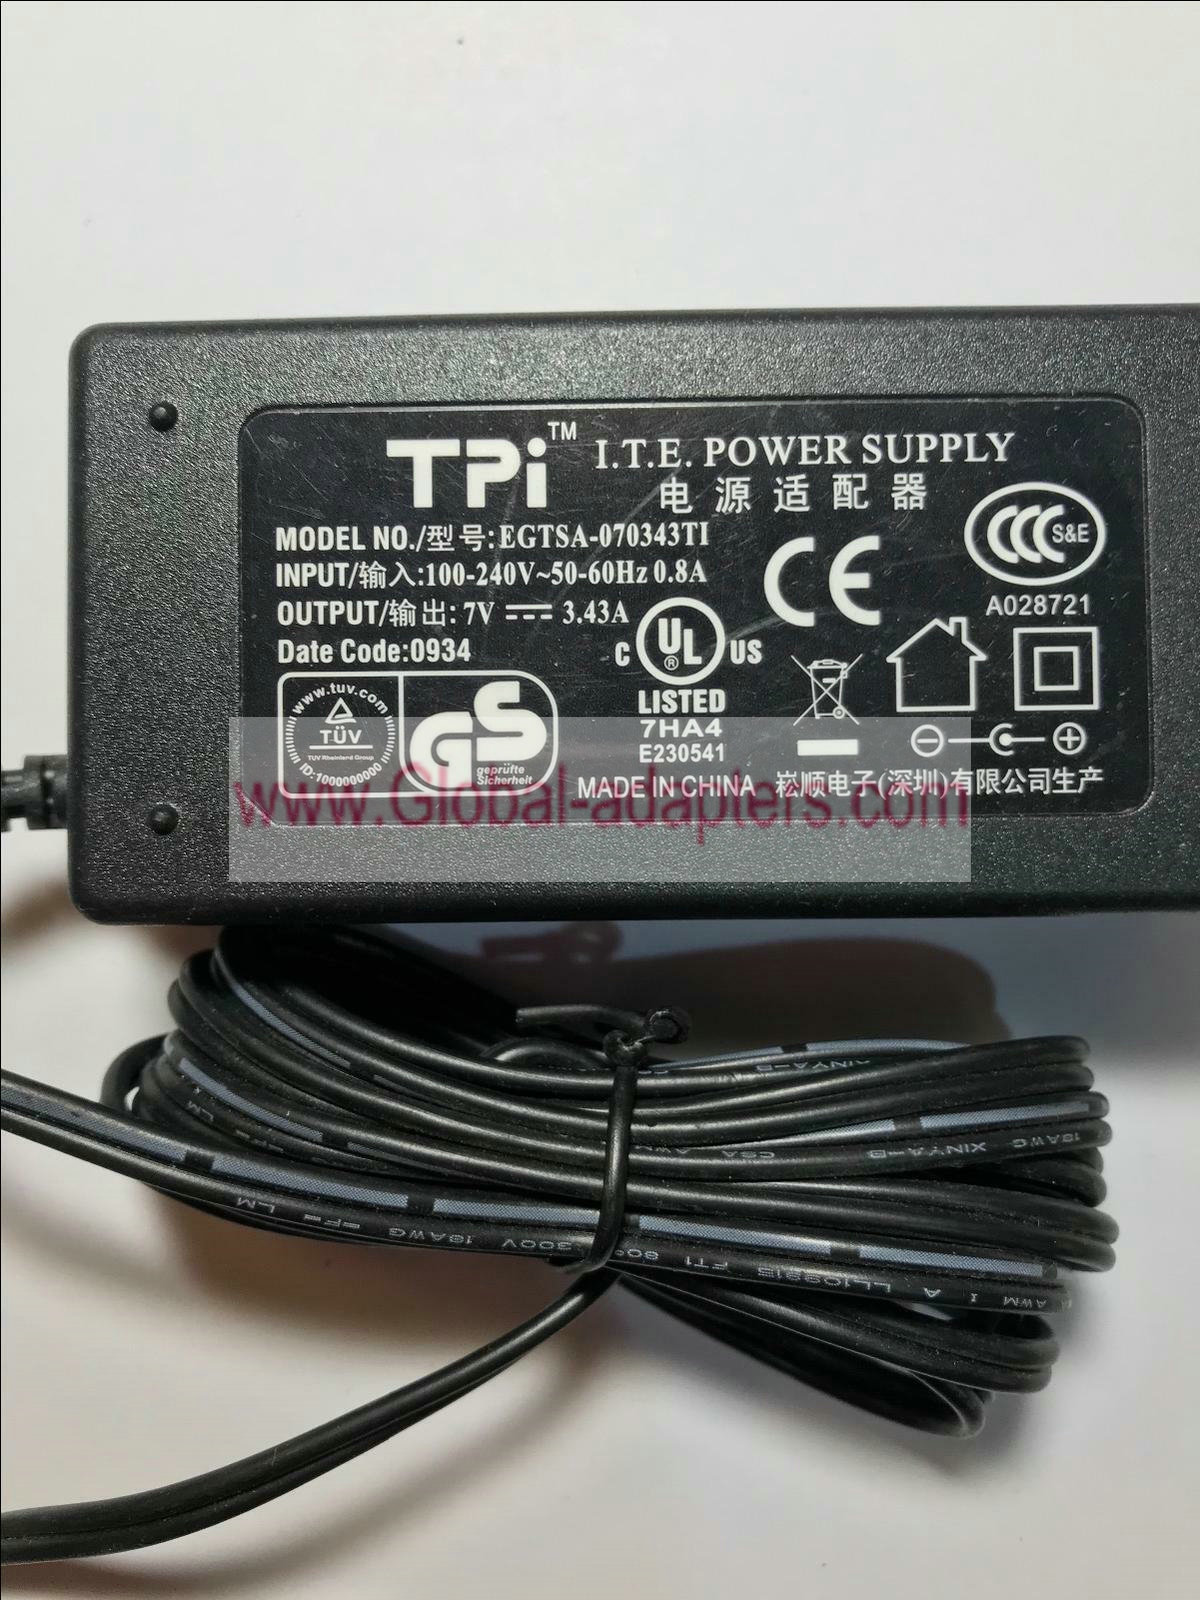 New 7V 3.43A ac adapter TPI EGTSA-070343TI PSU ITE Power Supply